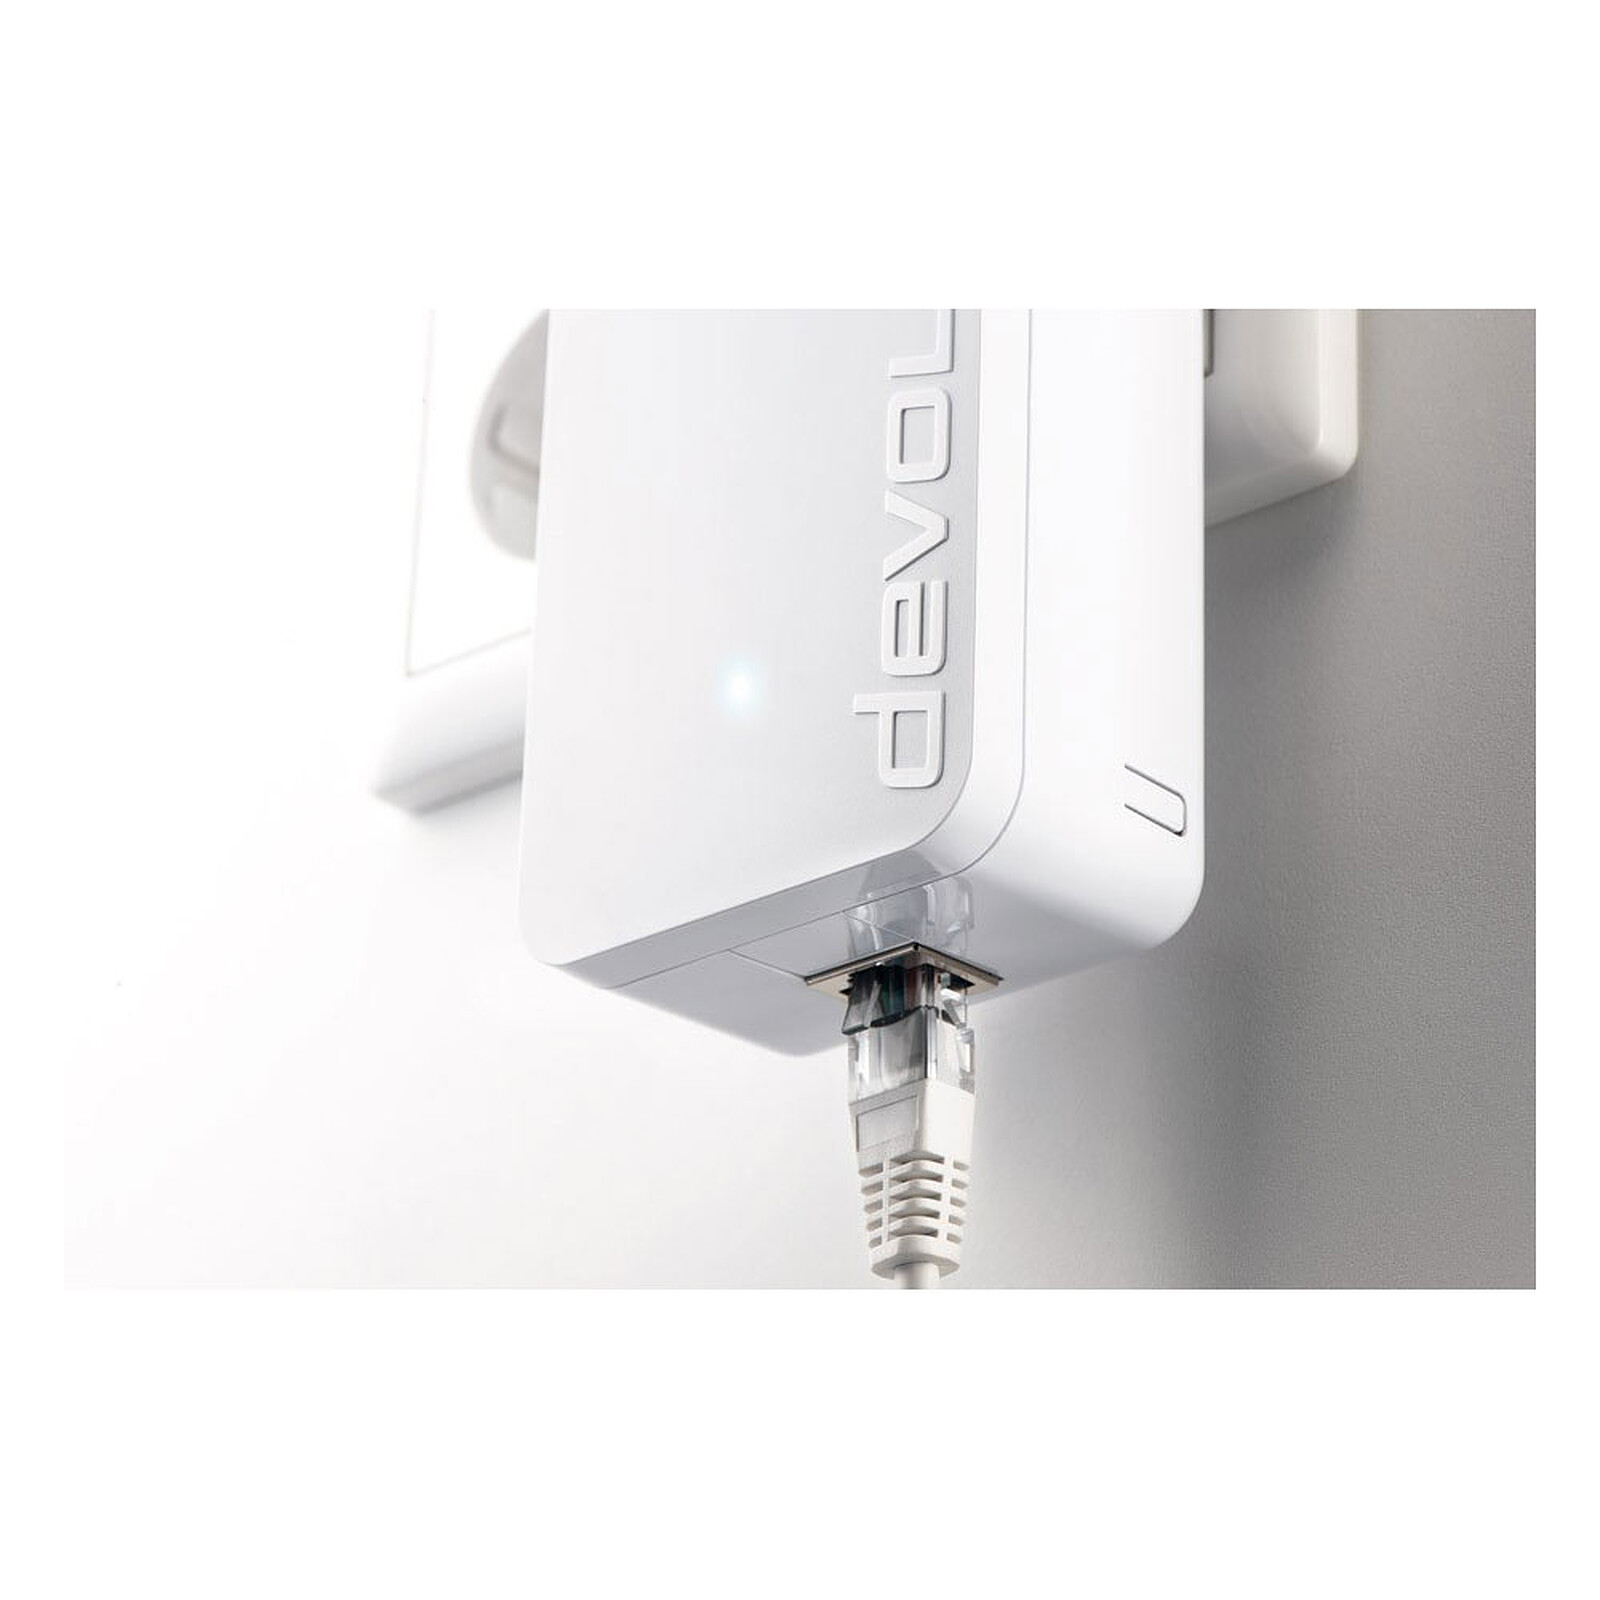 Devolo dLAN 1200 - Powerline adapter - LDLC 3-year warranty